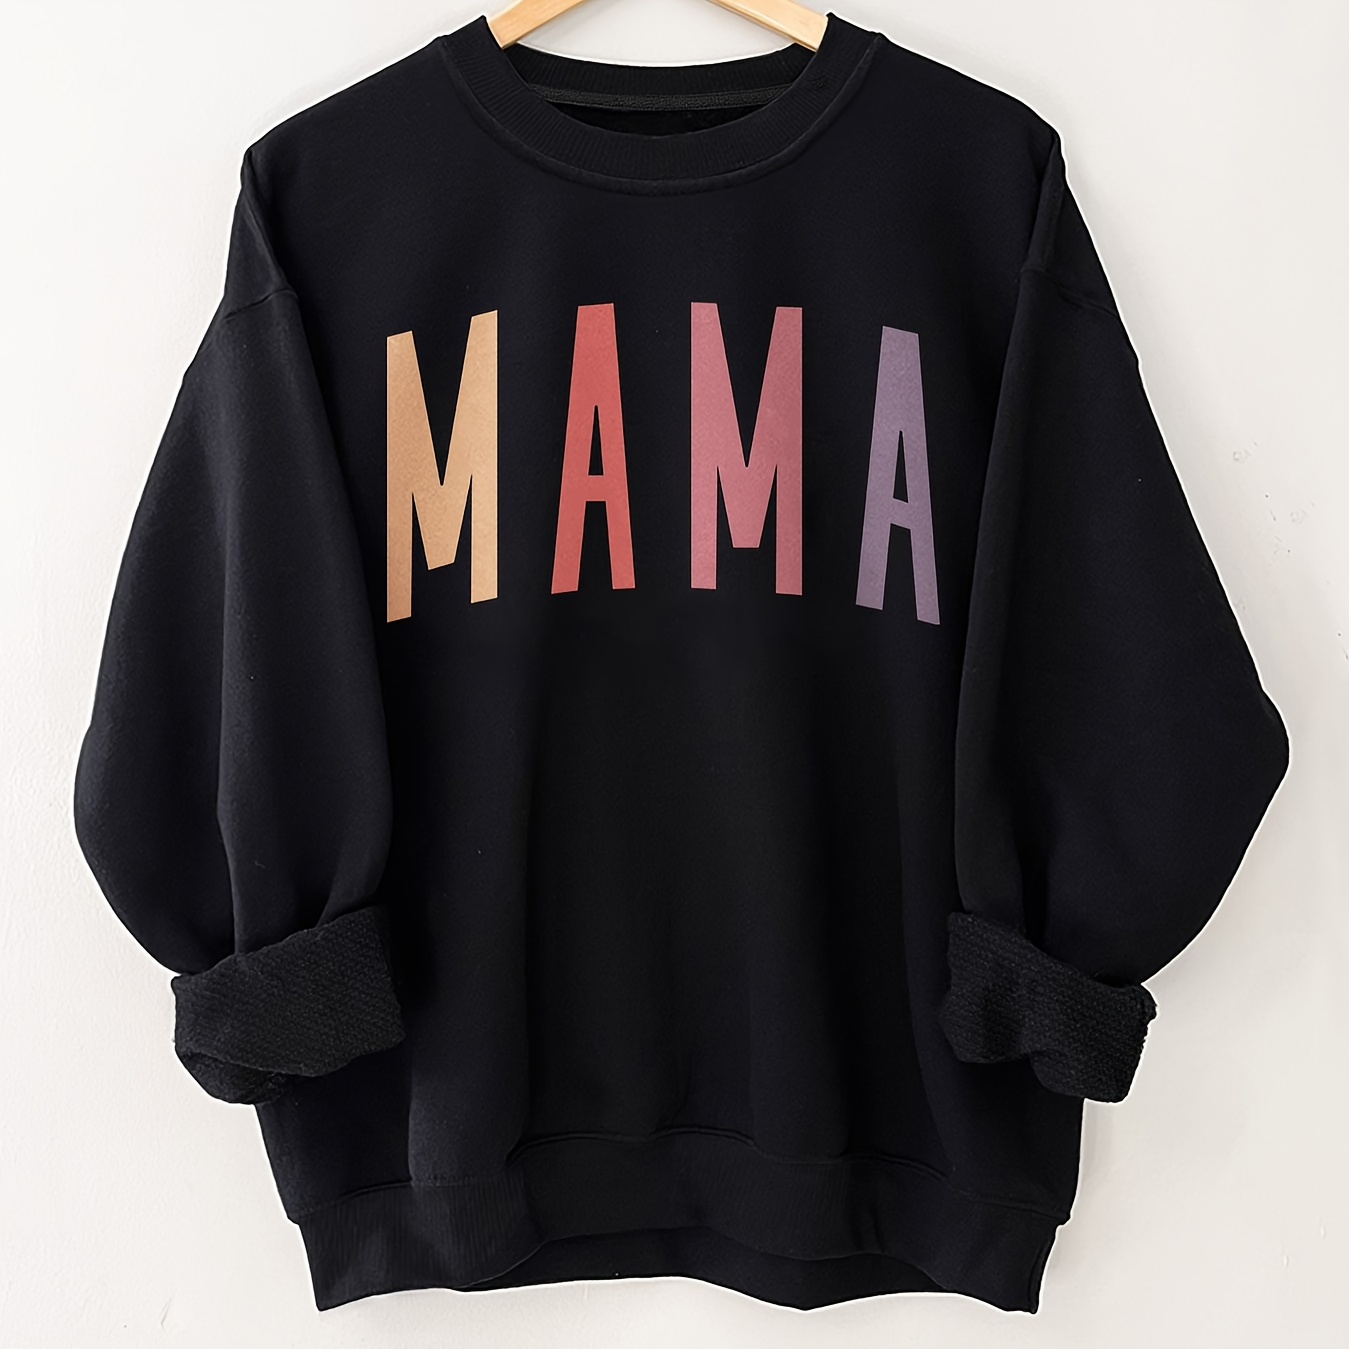 

Mama Letter Print Sweatshirt, Crew Neck Casual Sweatshirt For Fall & Spring, Women's Clothing